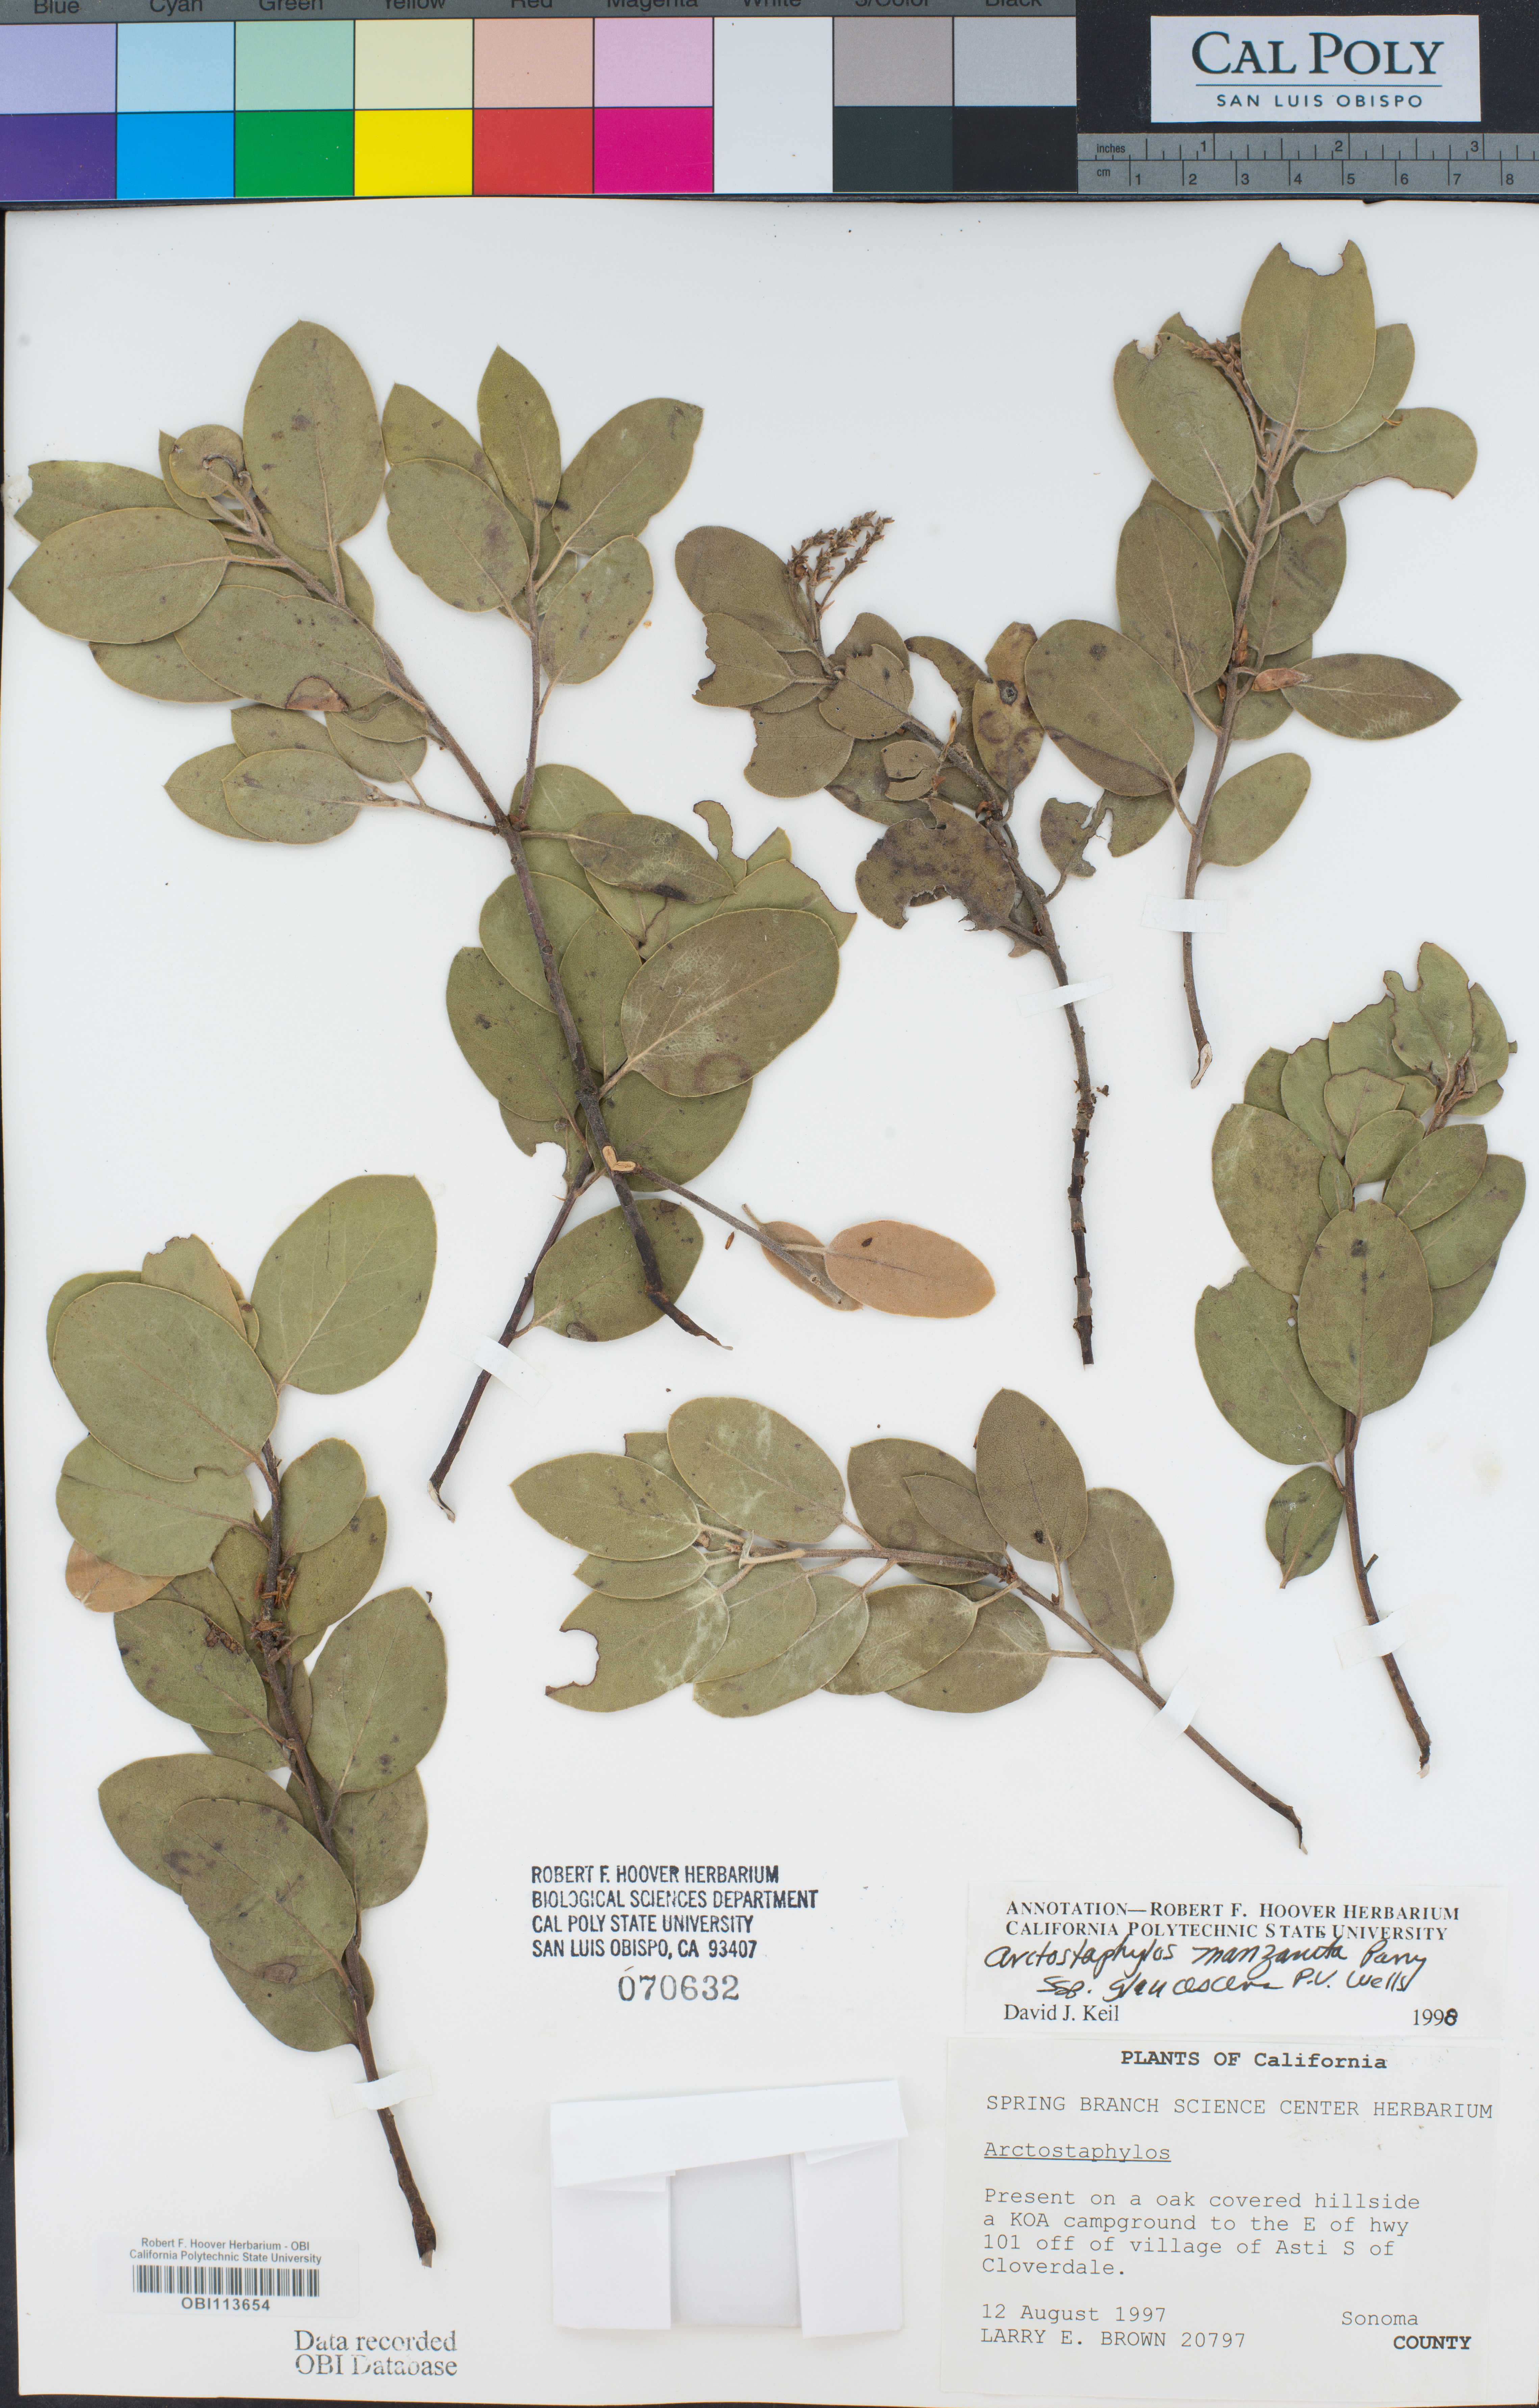 Arctostaphylos manzanita subsp. glaucescens image